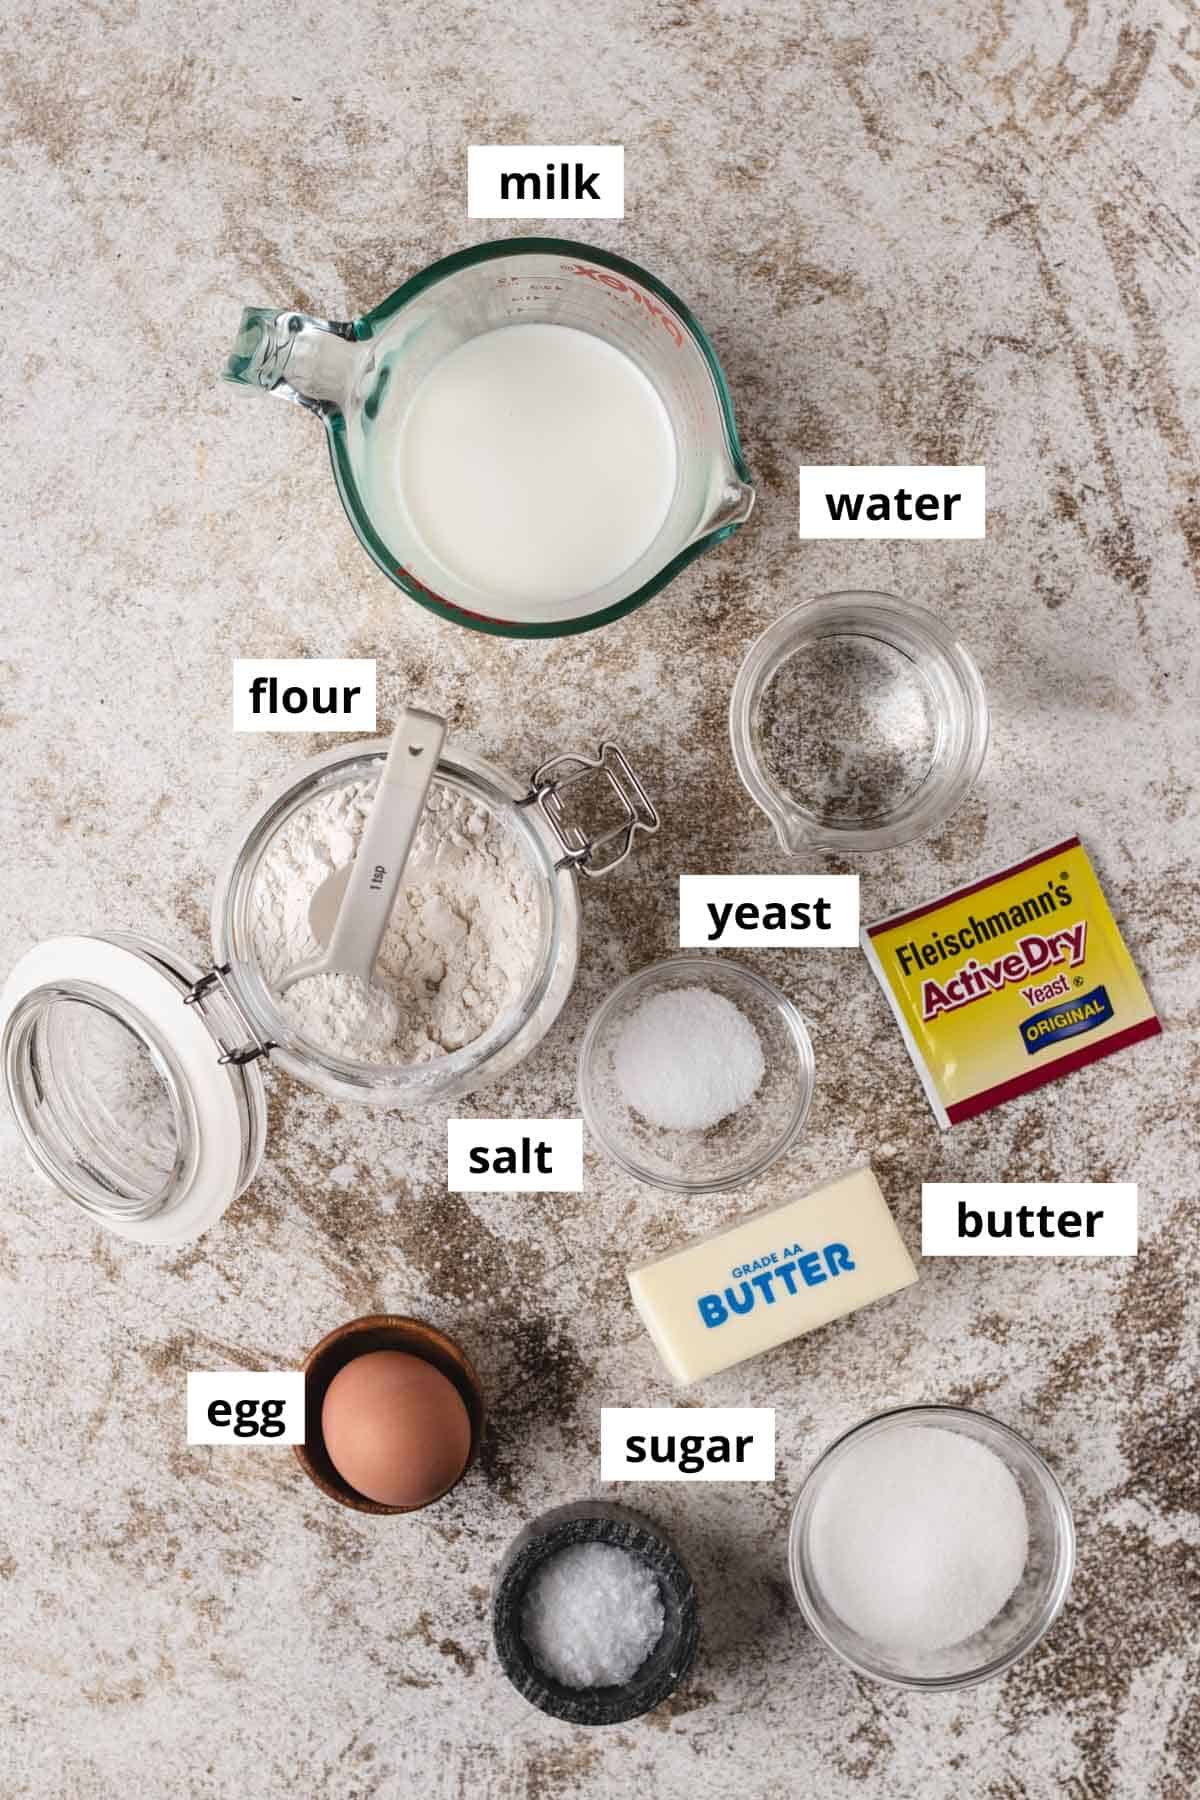 Milk, flour, water, yeast, salt, butter, eggs, and sugar.